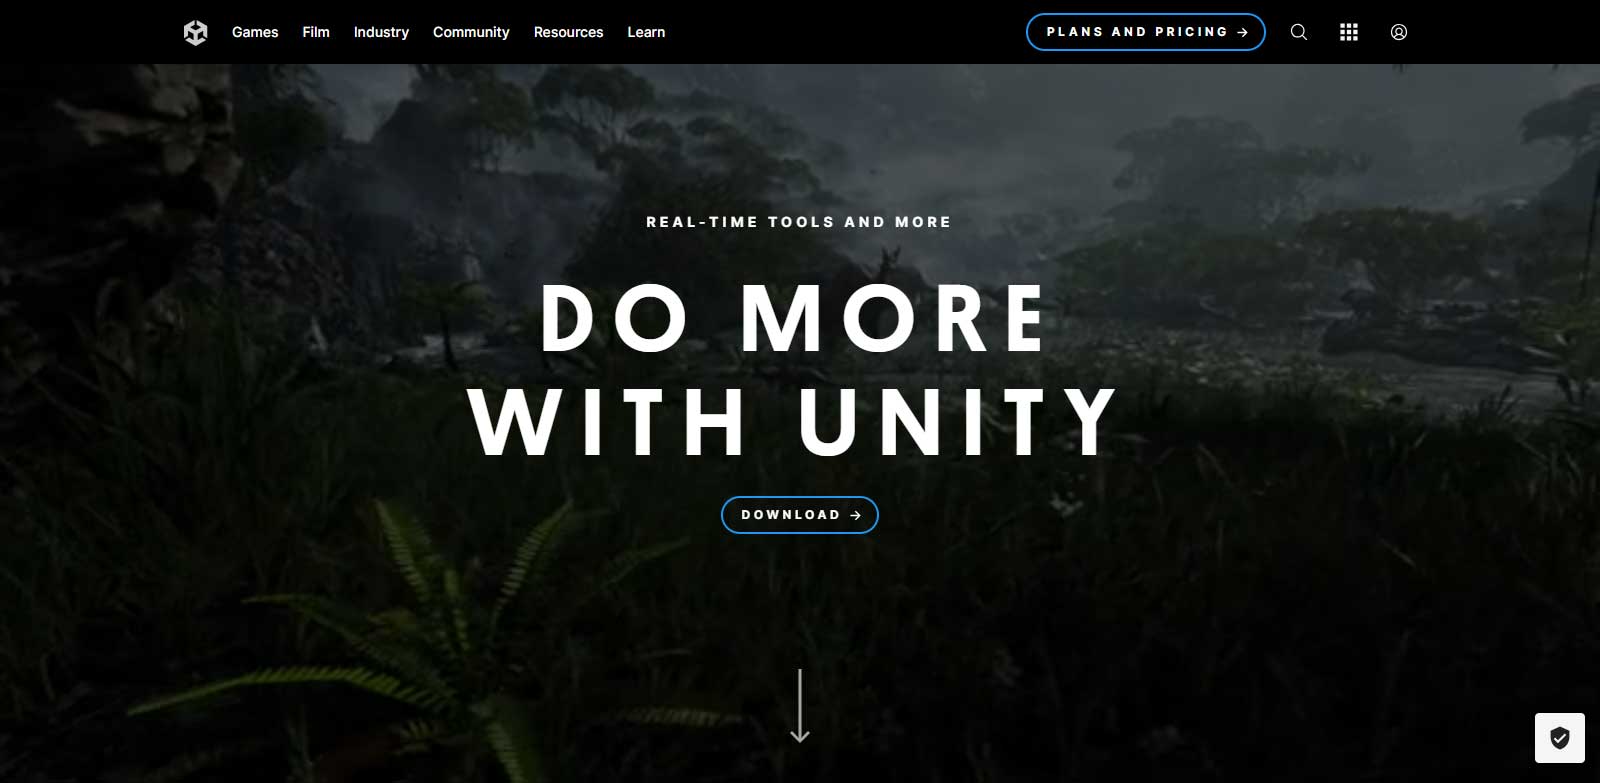 Unity Real-Time Development Platform